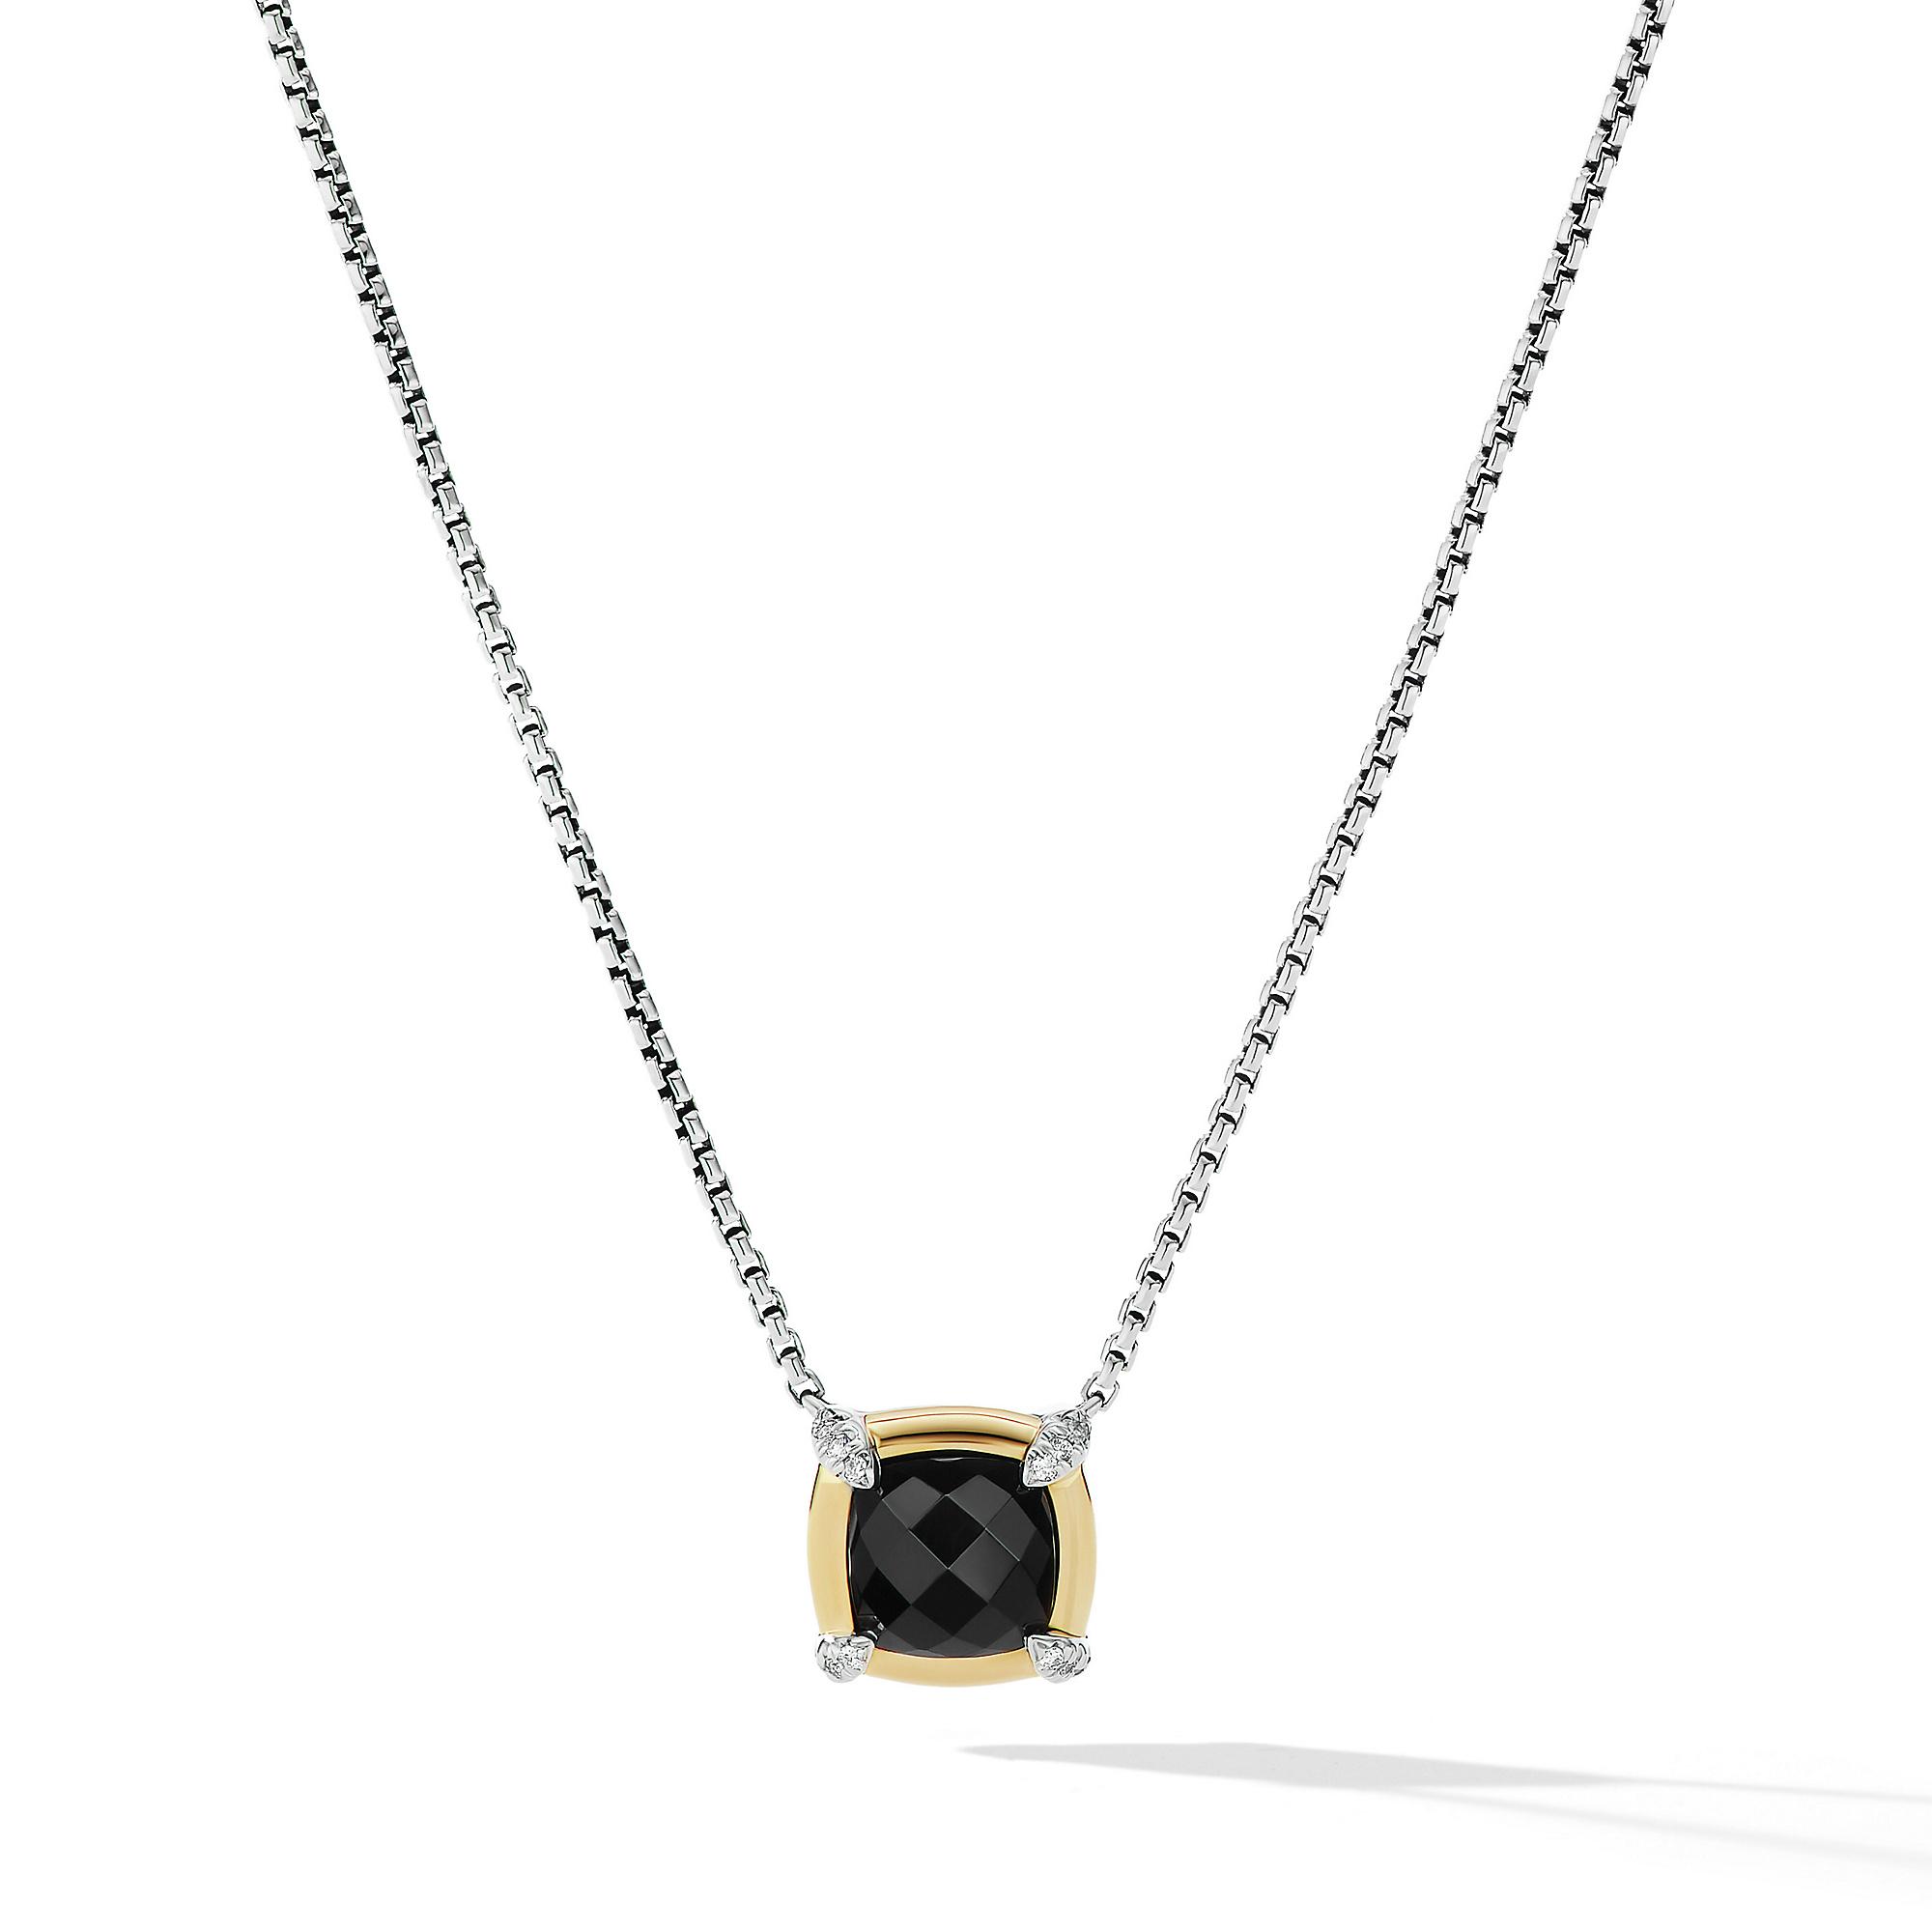 David Yurman Petite Chatelaine Pendant Necklace with Black Onyx, 18k Yellow Gold Bezel and Pave Diamonds